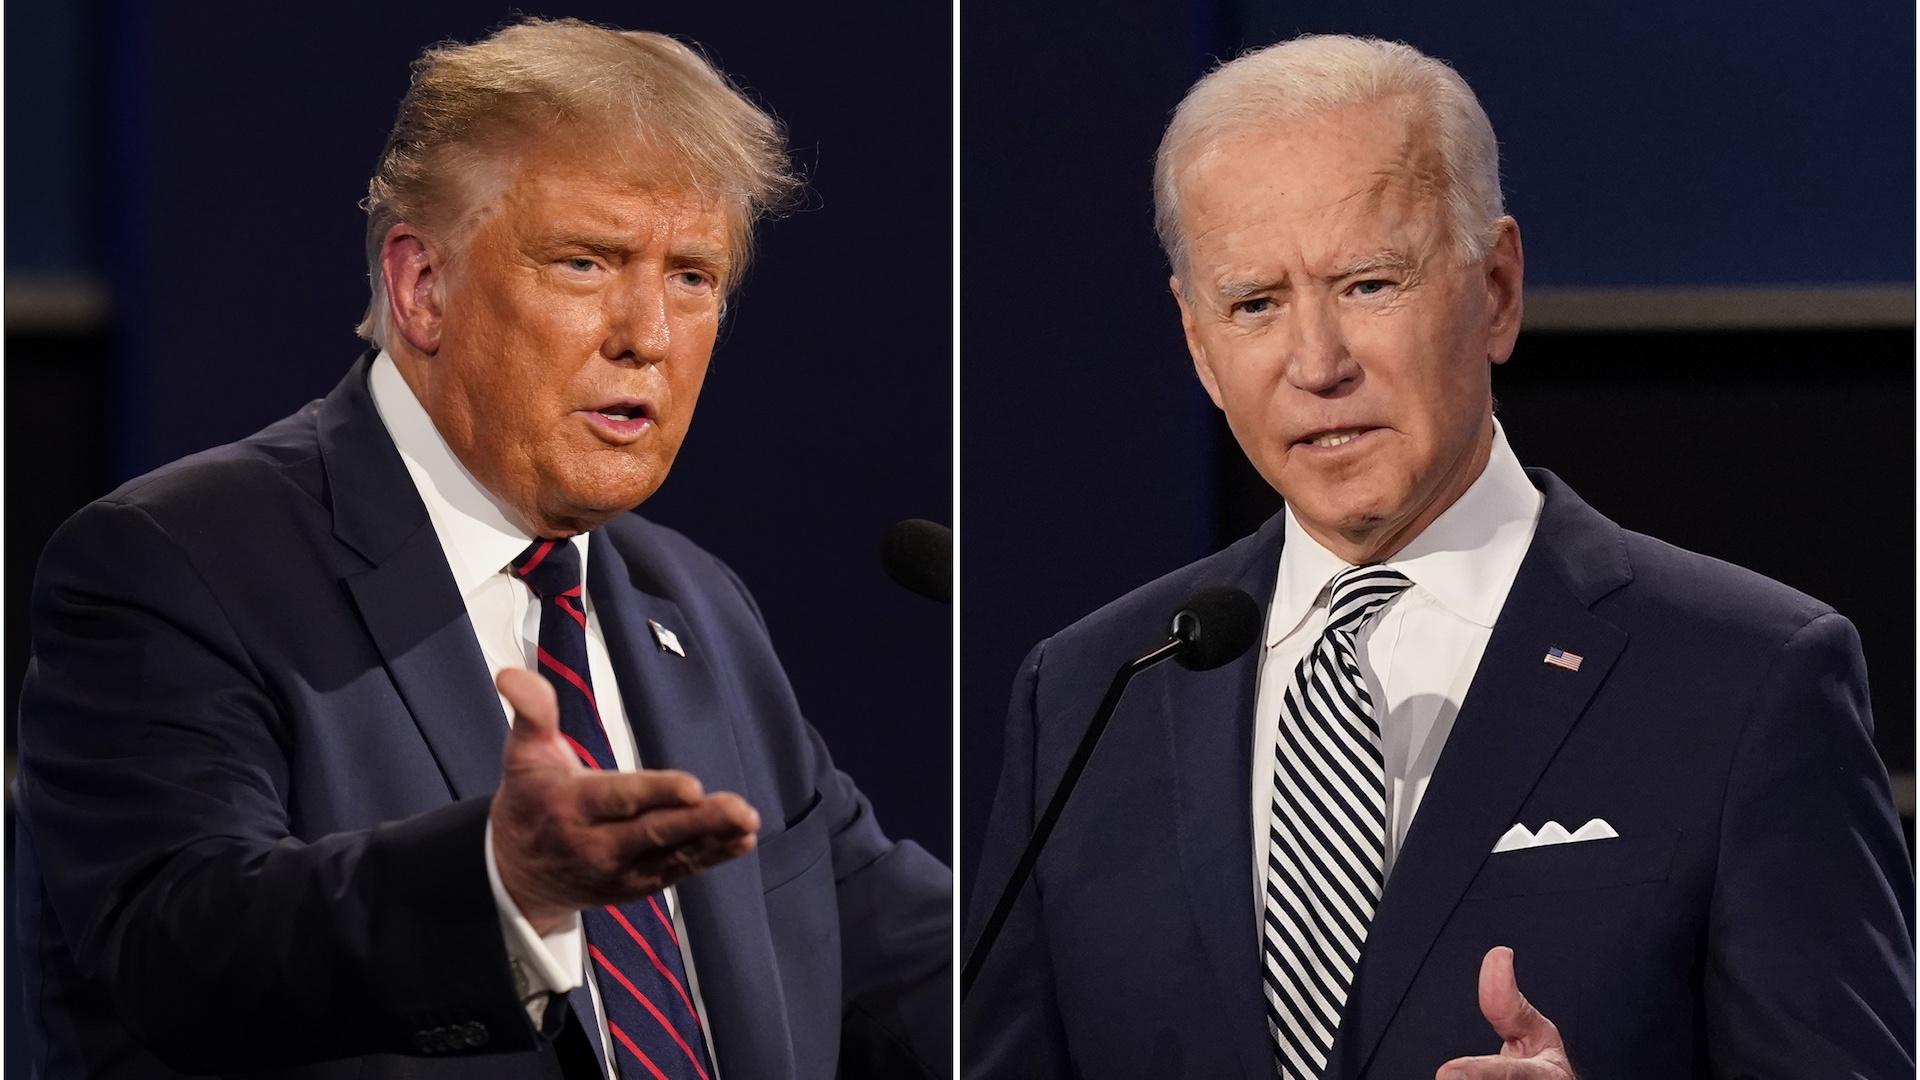 Trump Vows Not to Participate in Virtual Debate With Biden